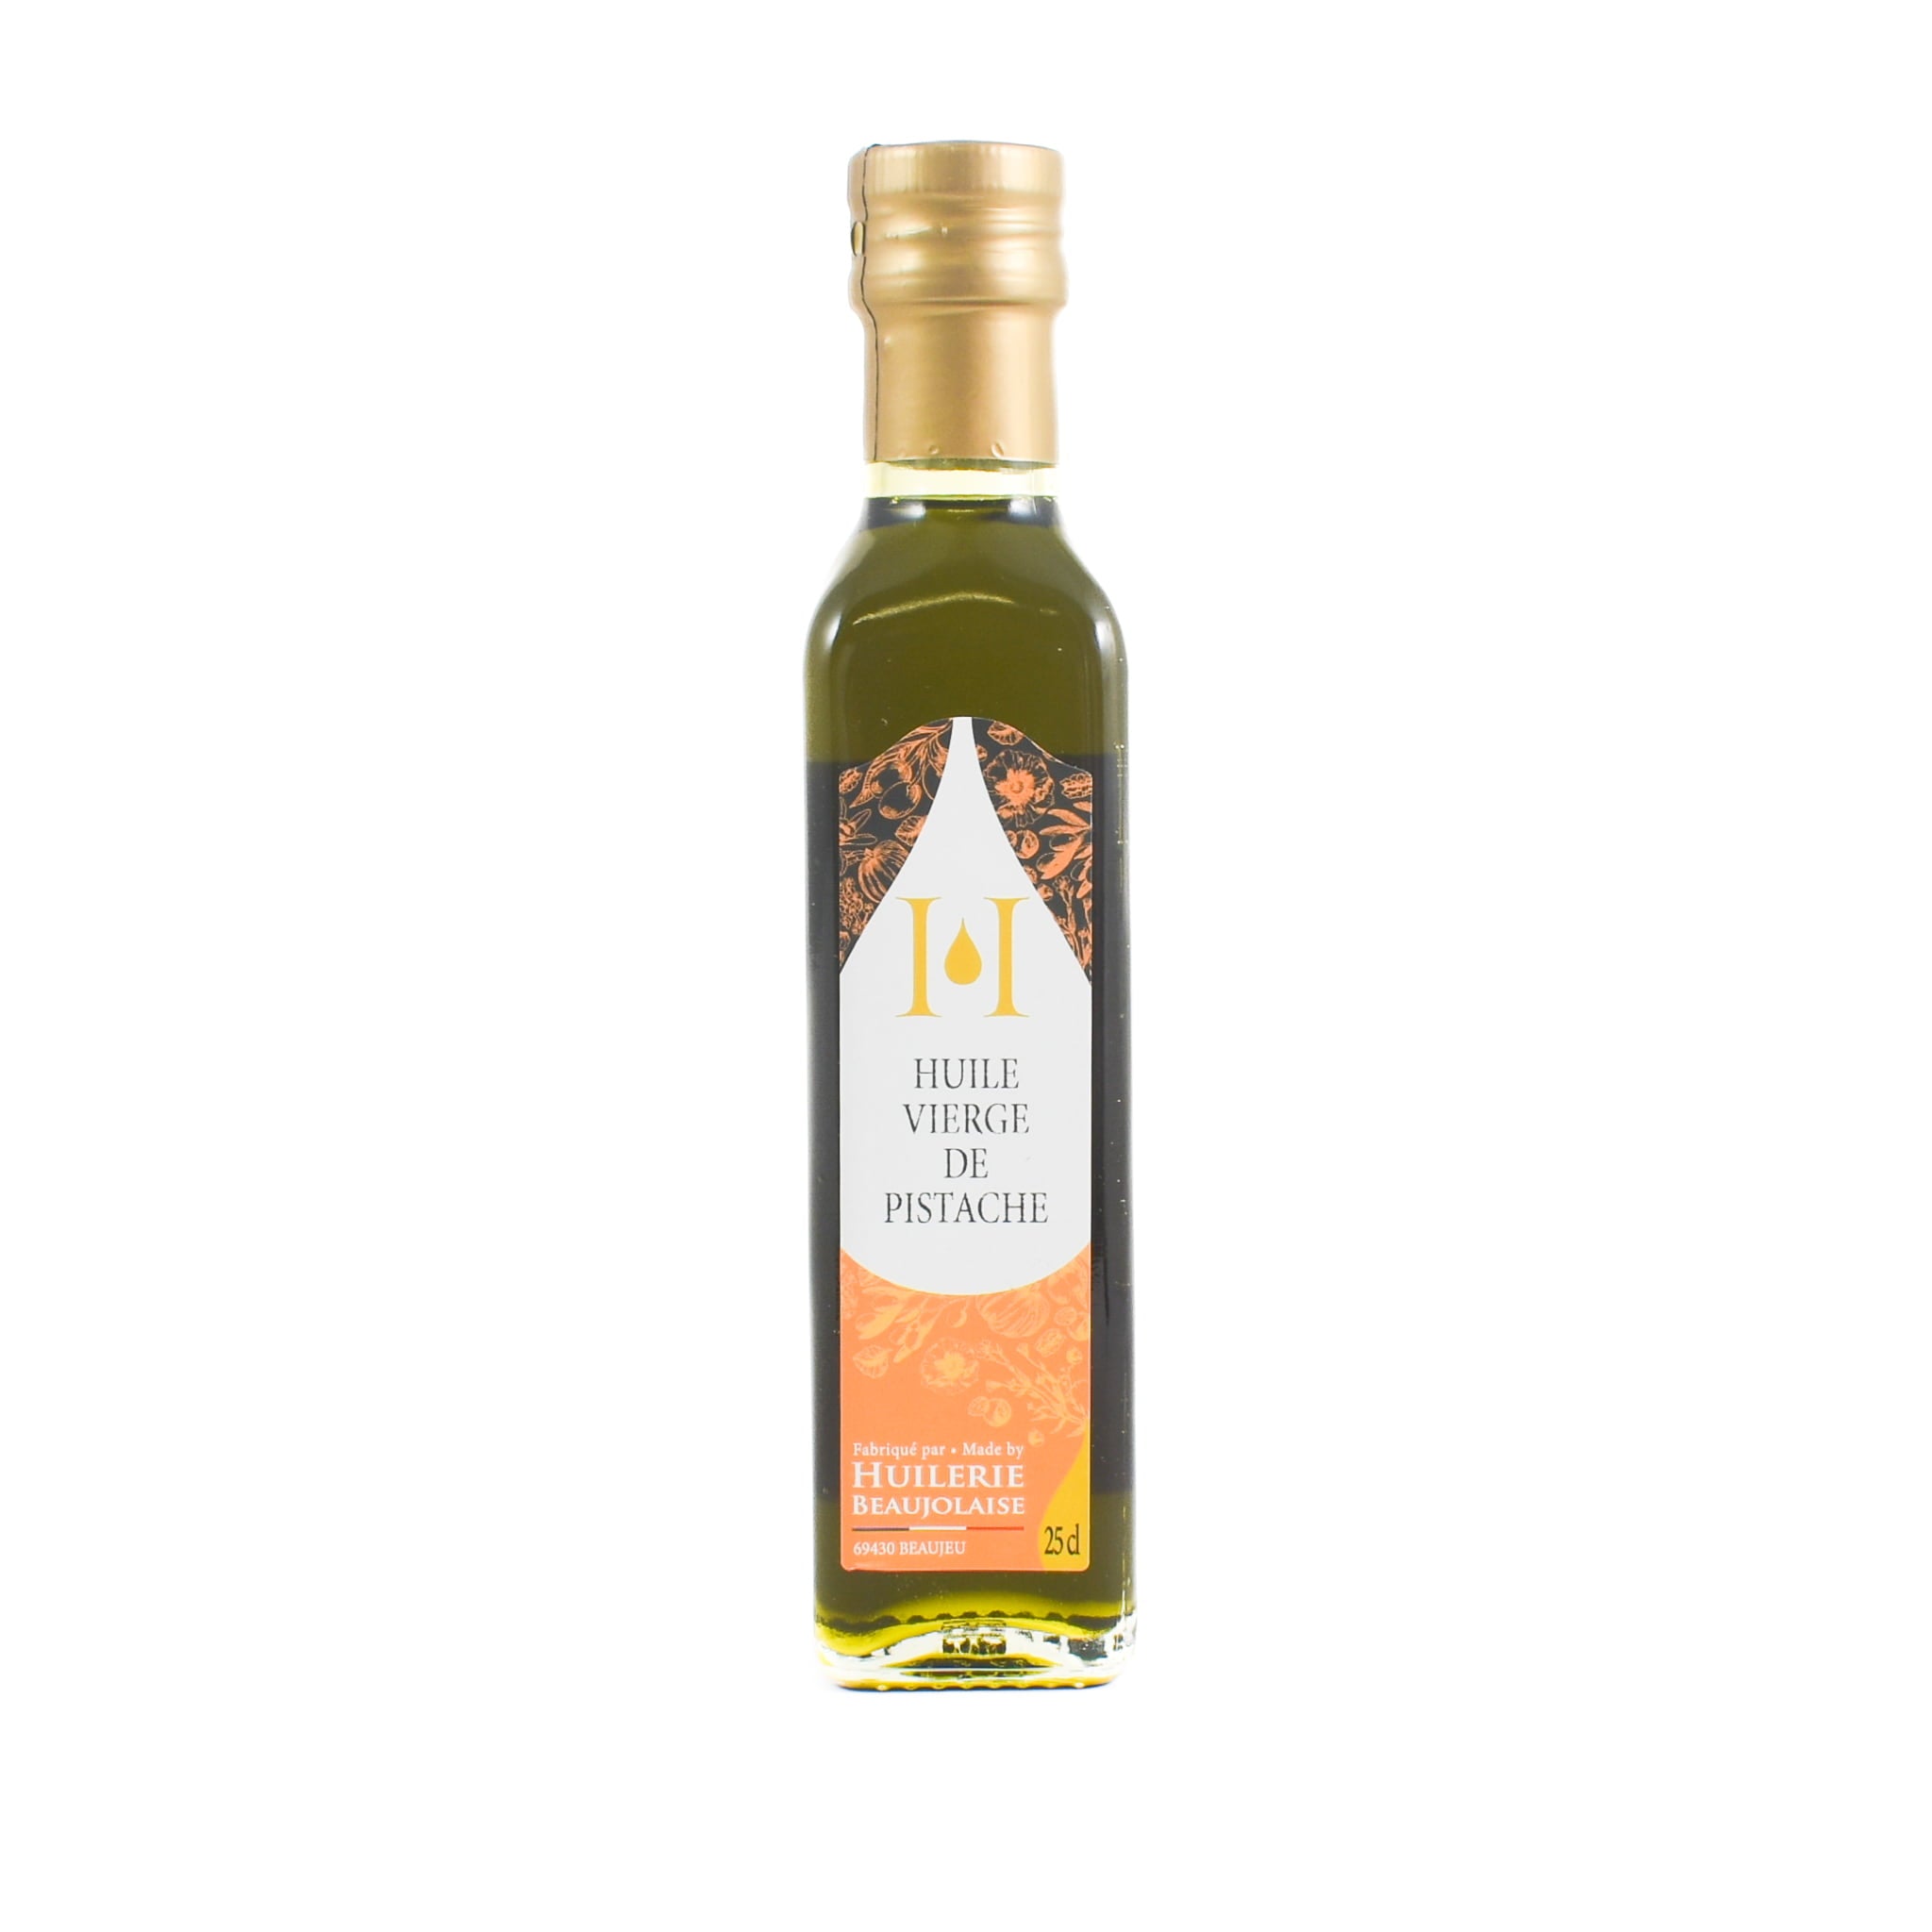 Huilerie Beaujolaise Virgin Pistachio Oil, 250ml